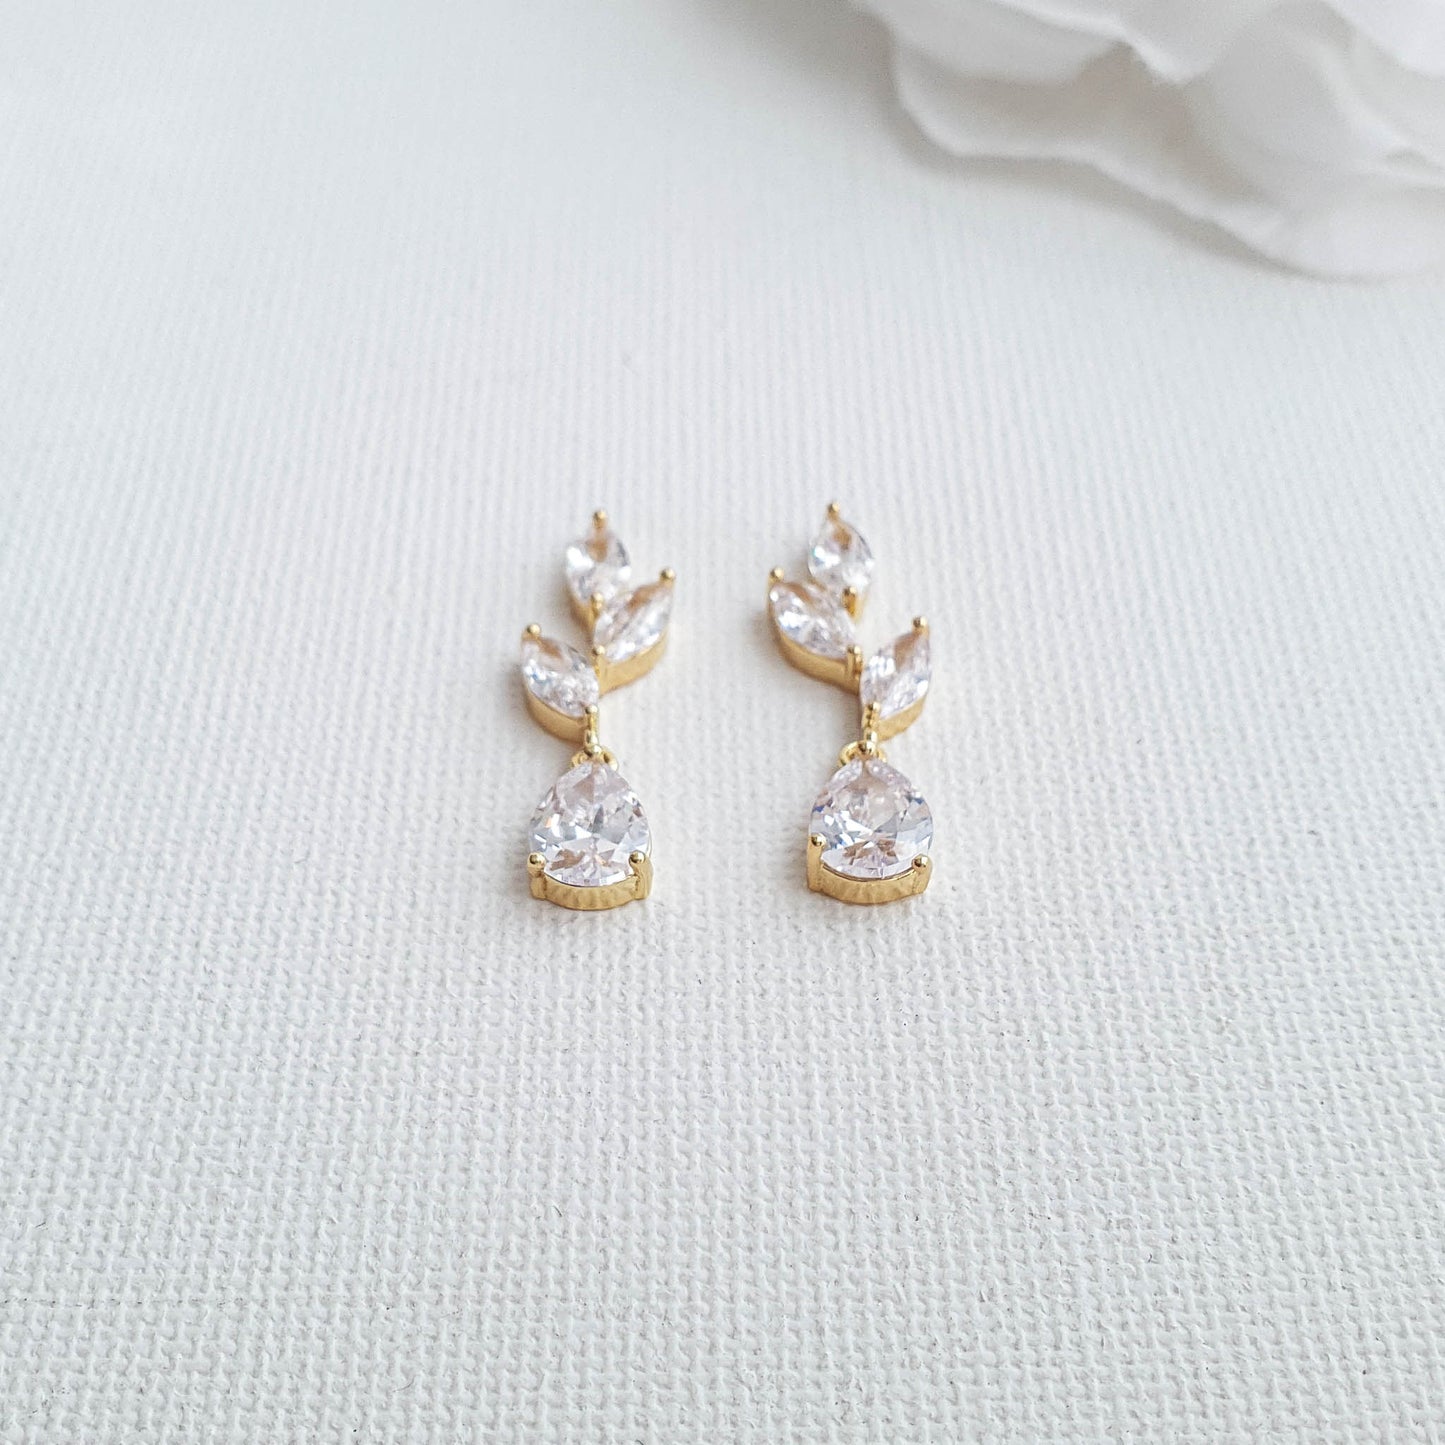 Leaf Wedding Bracelet and Earrings Set in Silver-Taylor